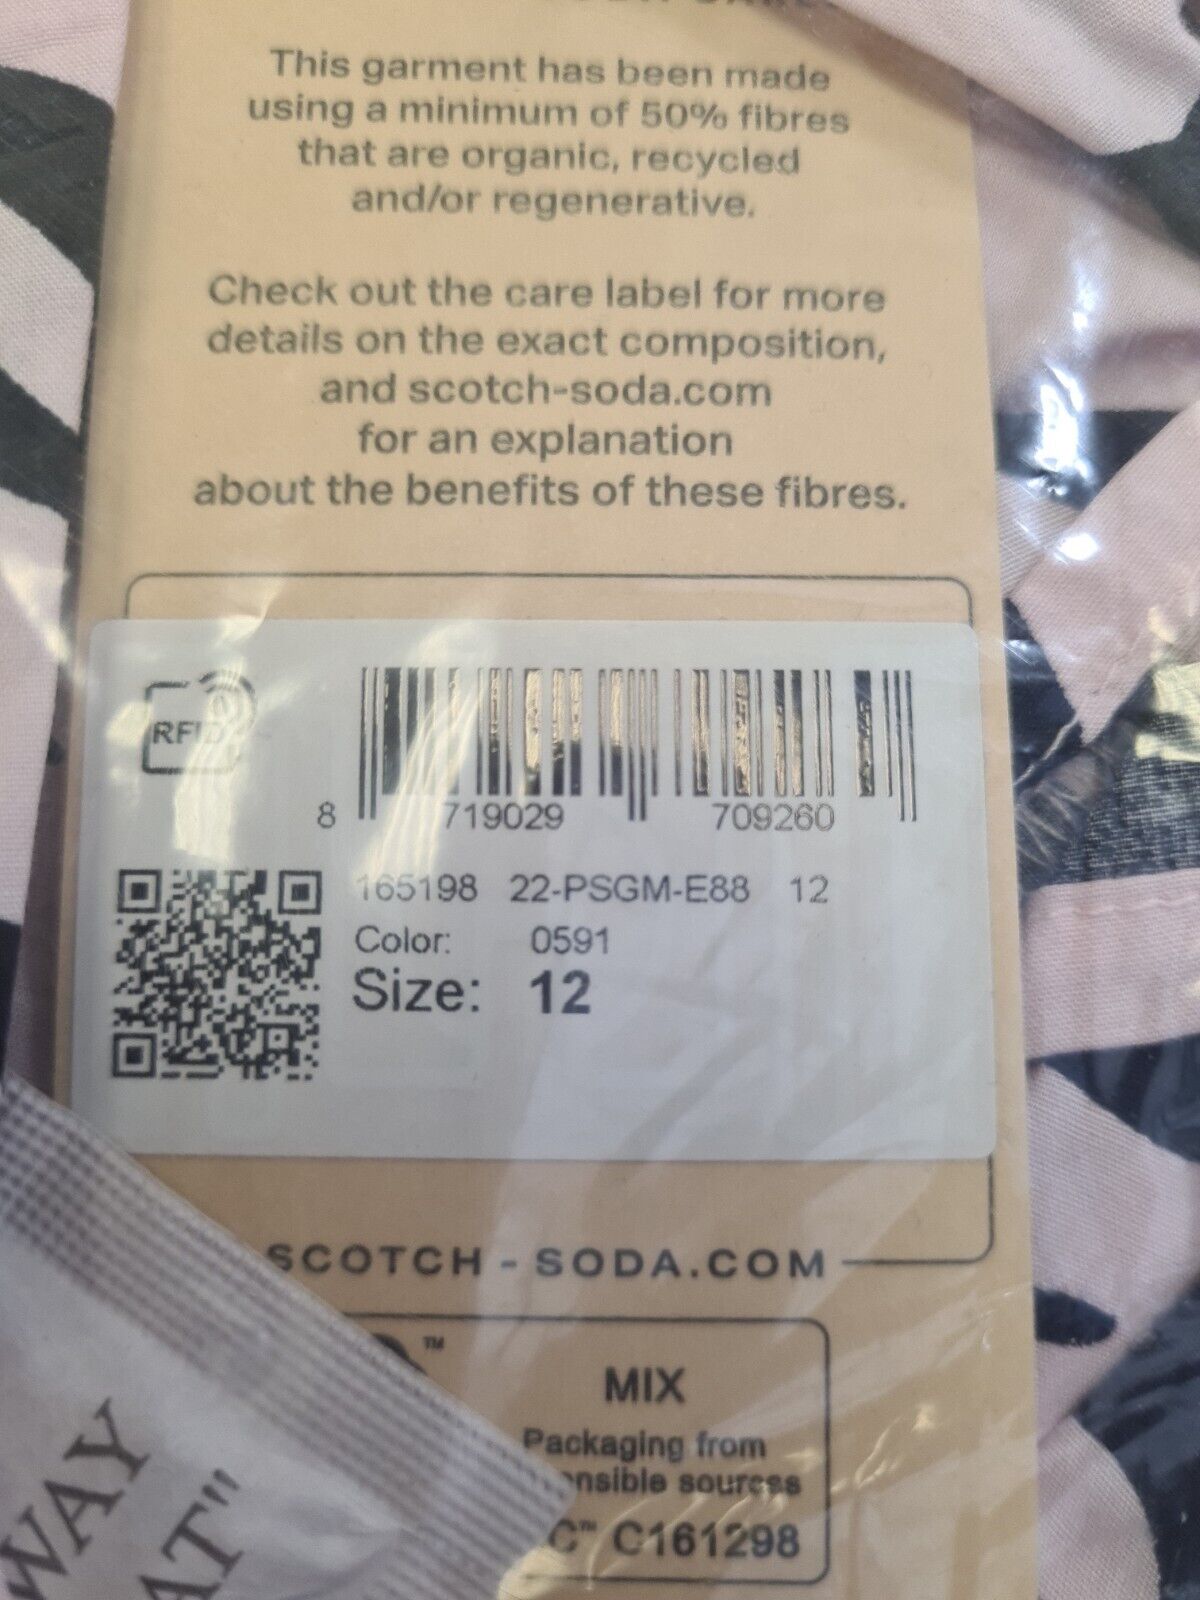 Scotch & Soda Pink Zebra Print Kids Dress Size 10 Years **** V31F